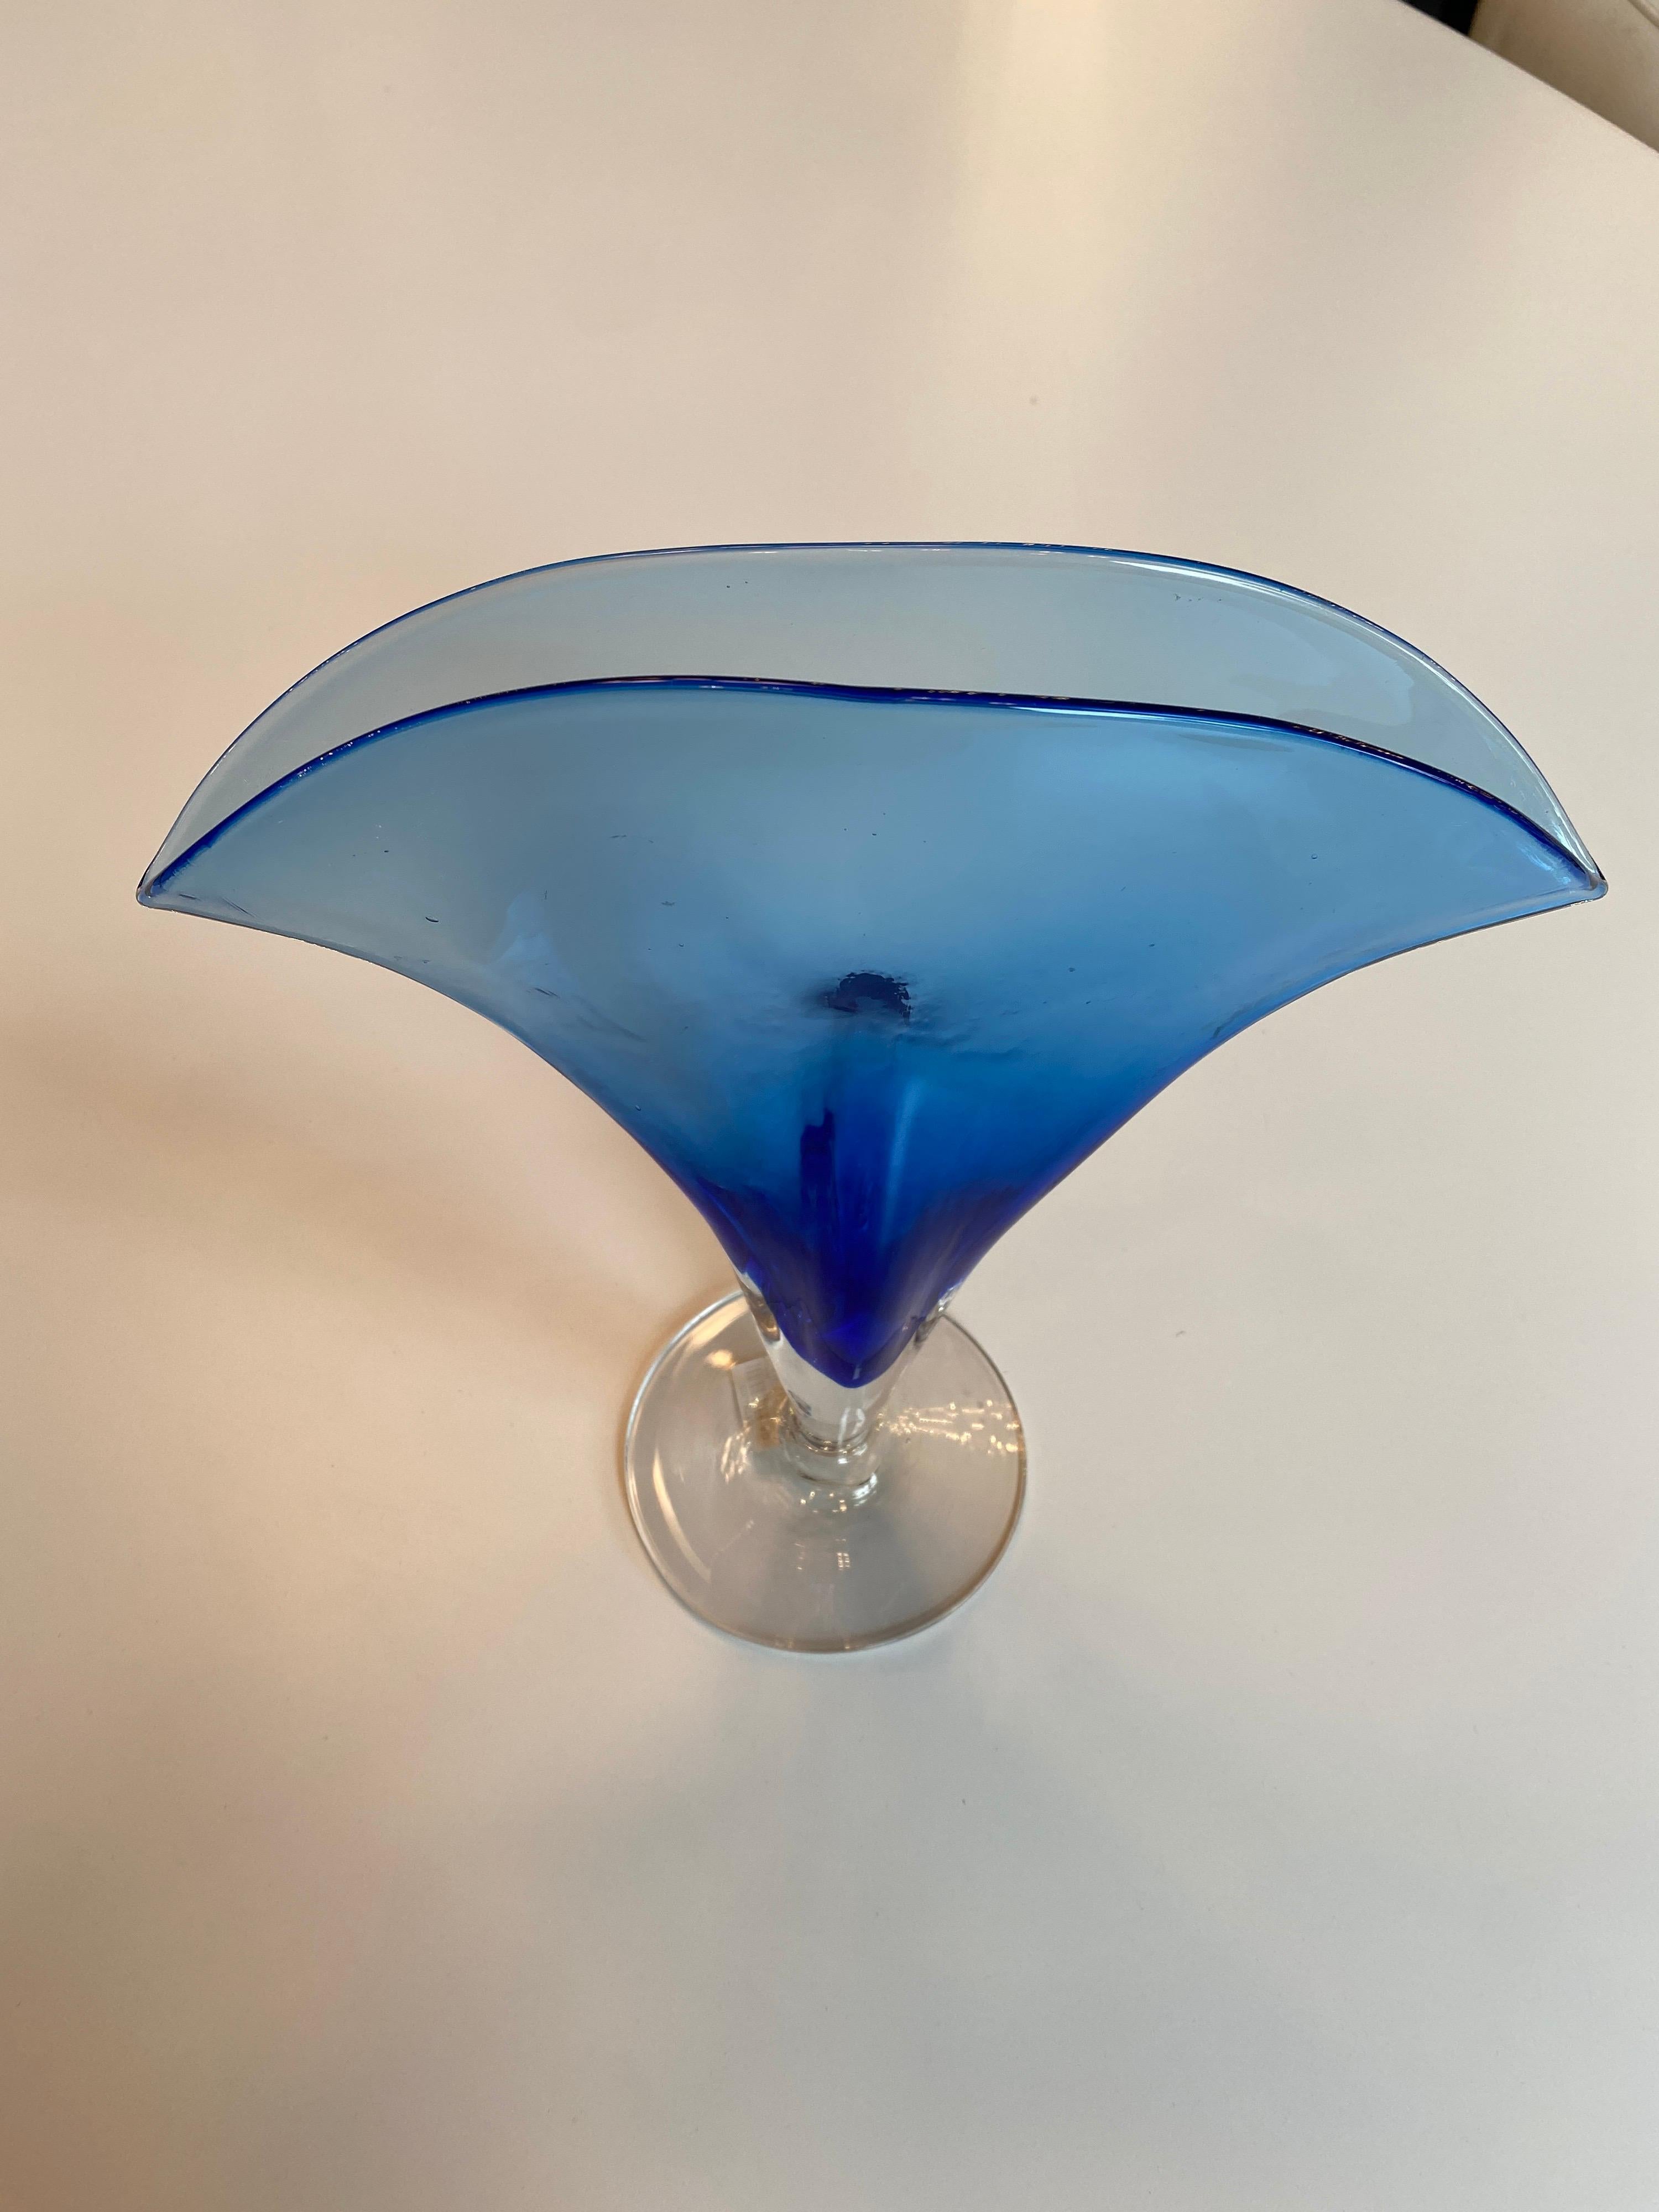 Gorgeous blue glass fan vase.